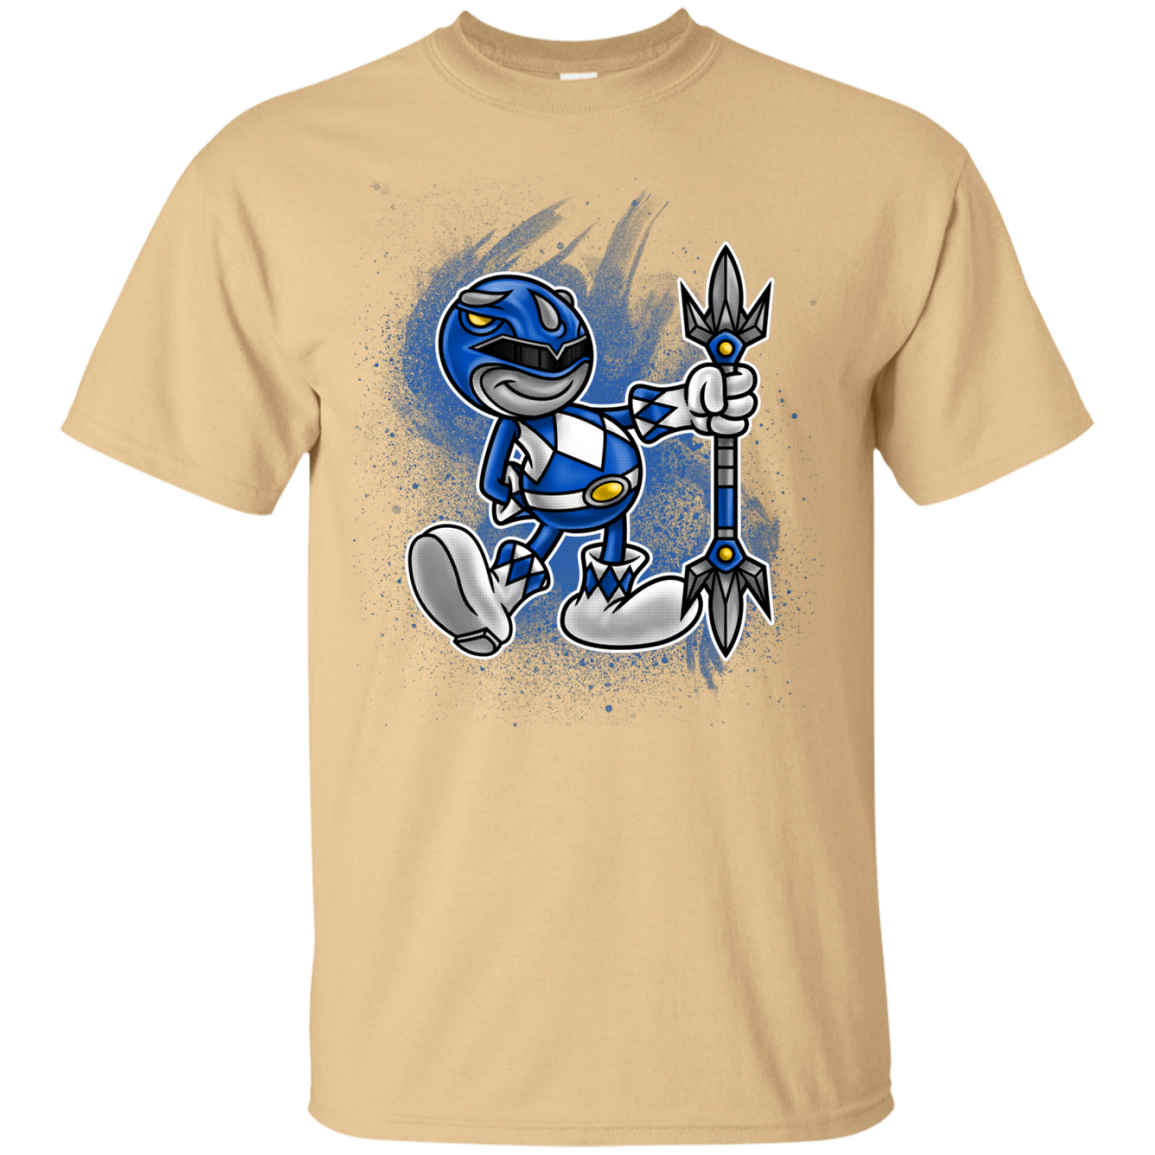 Blue Ranger Artwork T-Shirt